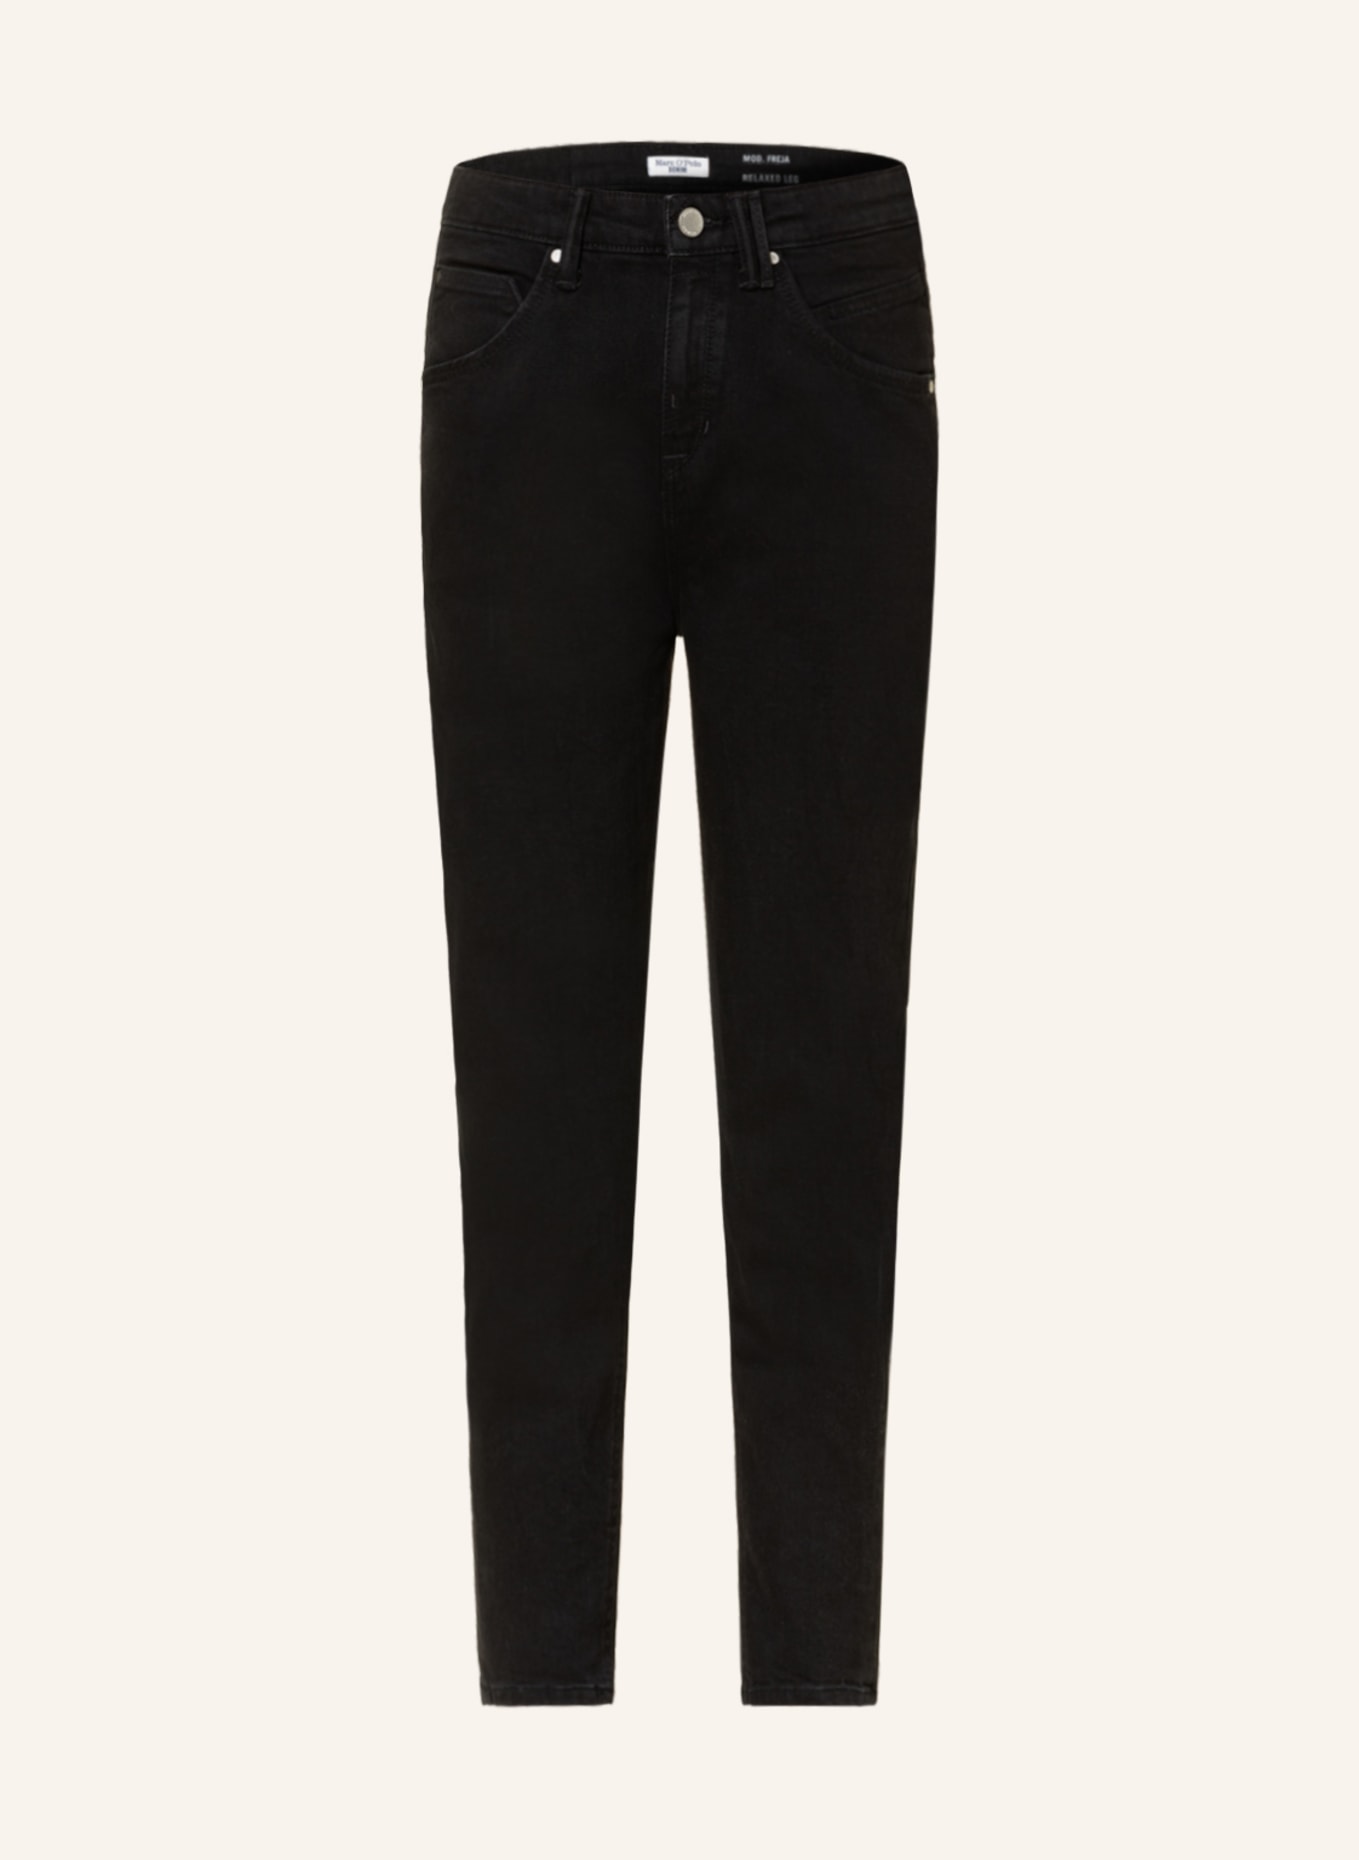 Marc O'Polo DENIM Boyfriend Jeans, Farbe: Q14 multi/vintage black (Bild 1)